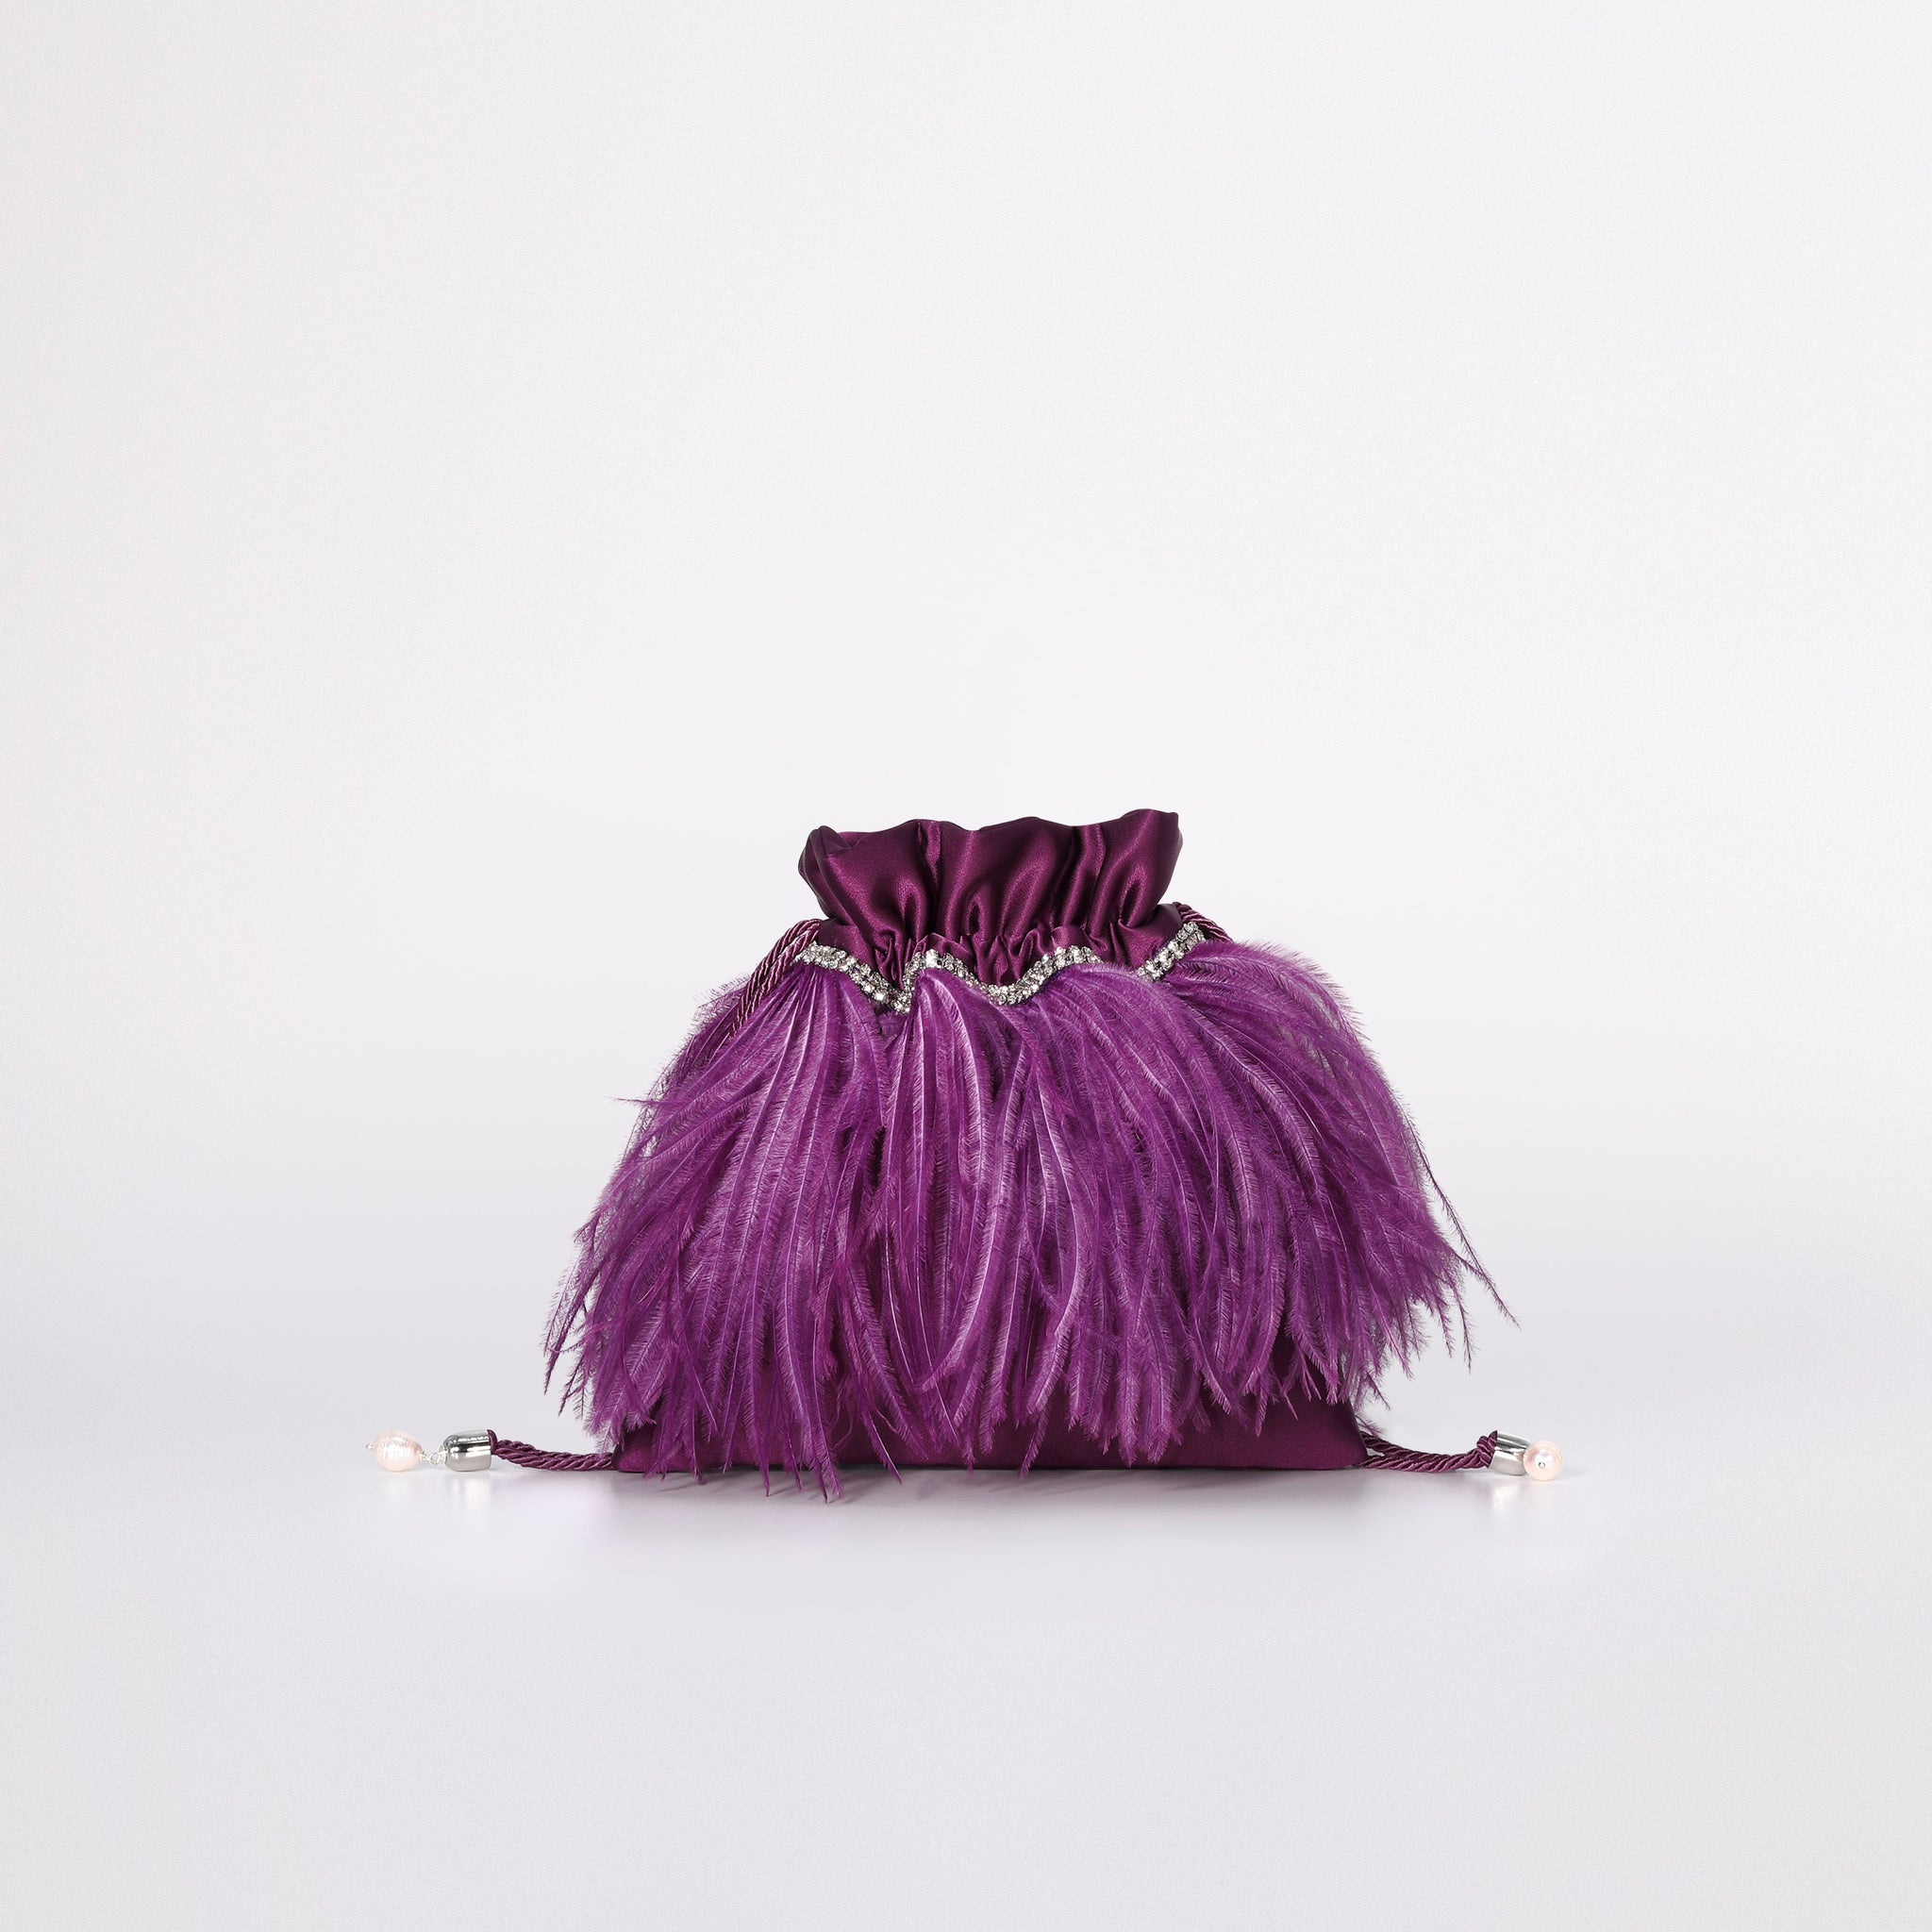 Mini Feathers Bag in colorazione petunia